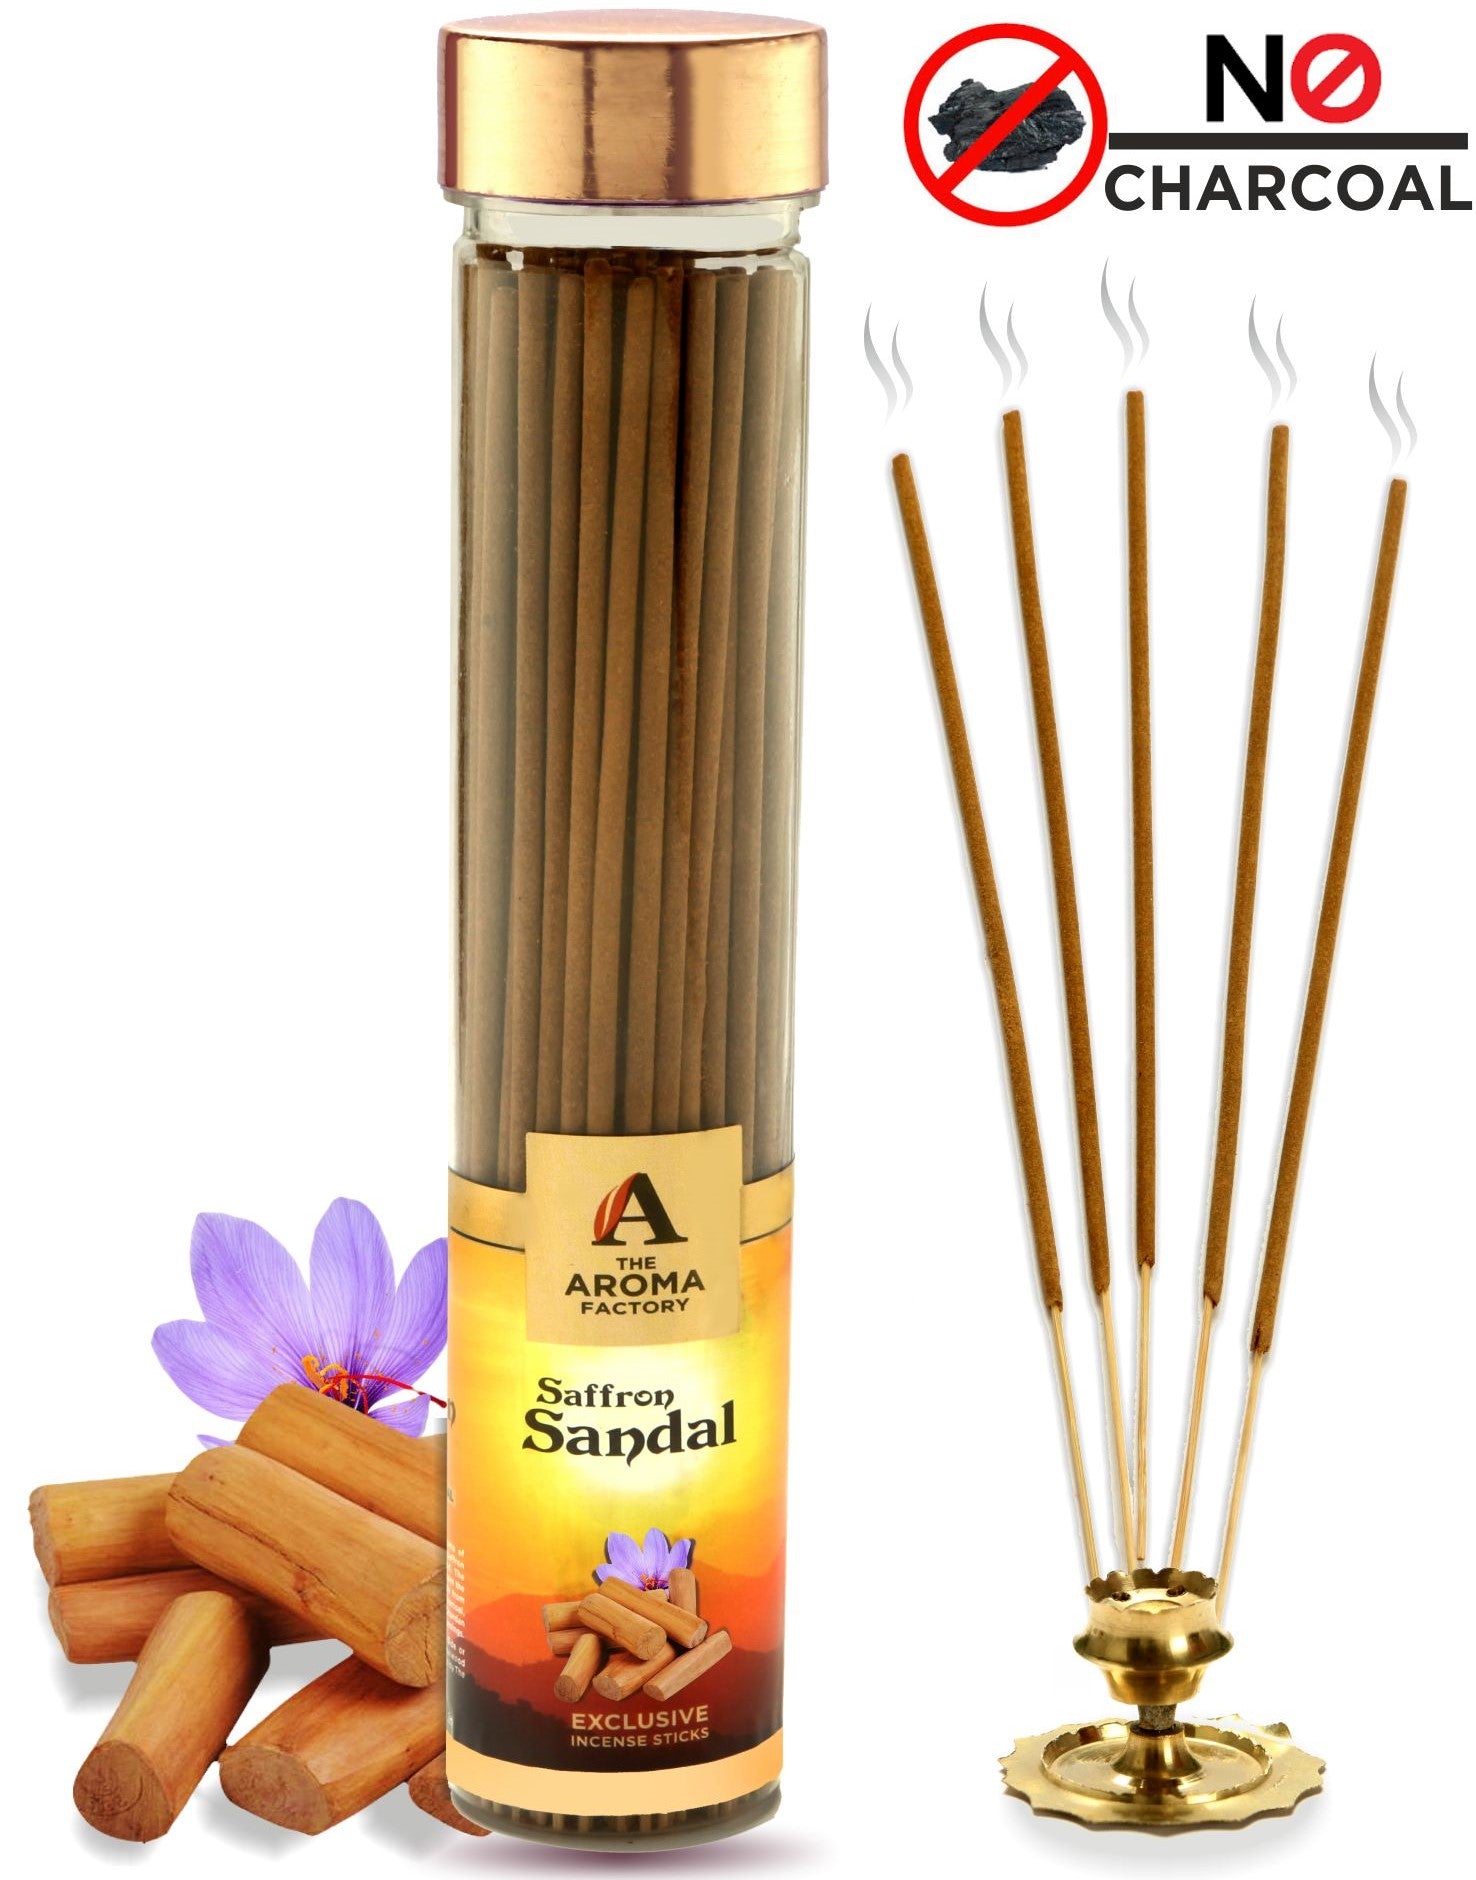 The Aroma Factory Kesar Chandan Incense Sticks Agarbatti (Charcoal Free & 100% Herbal) Bottle, 100g